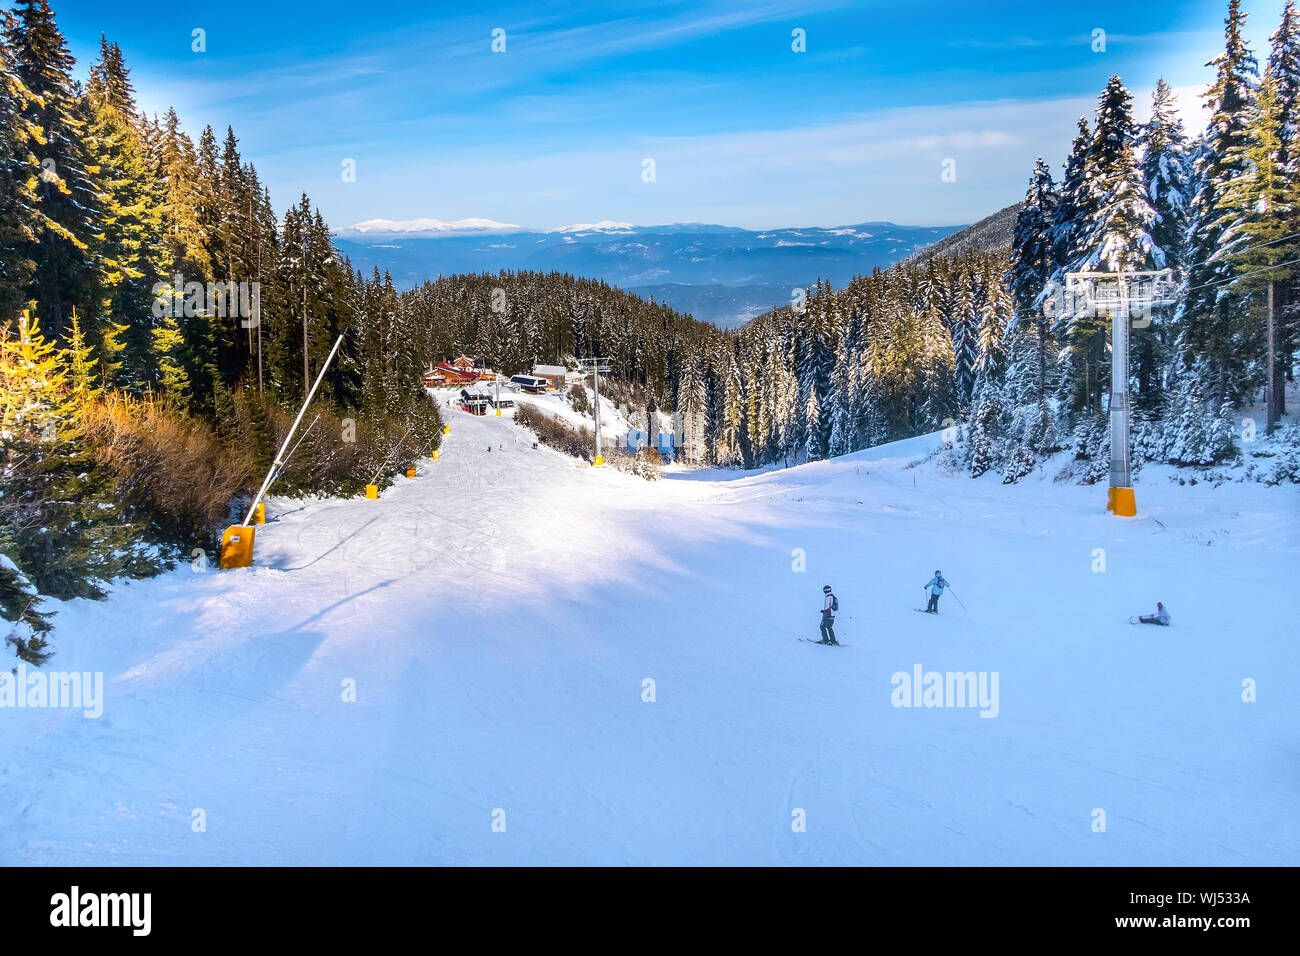 Bansko, Bulgaria ski resort panoramic view with mountain peaks, pine trees,  ski slope, restaurants and ski lifts Stock Photo - Alamy